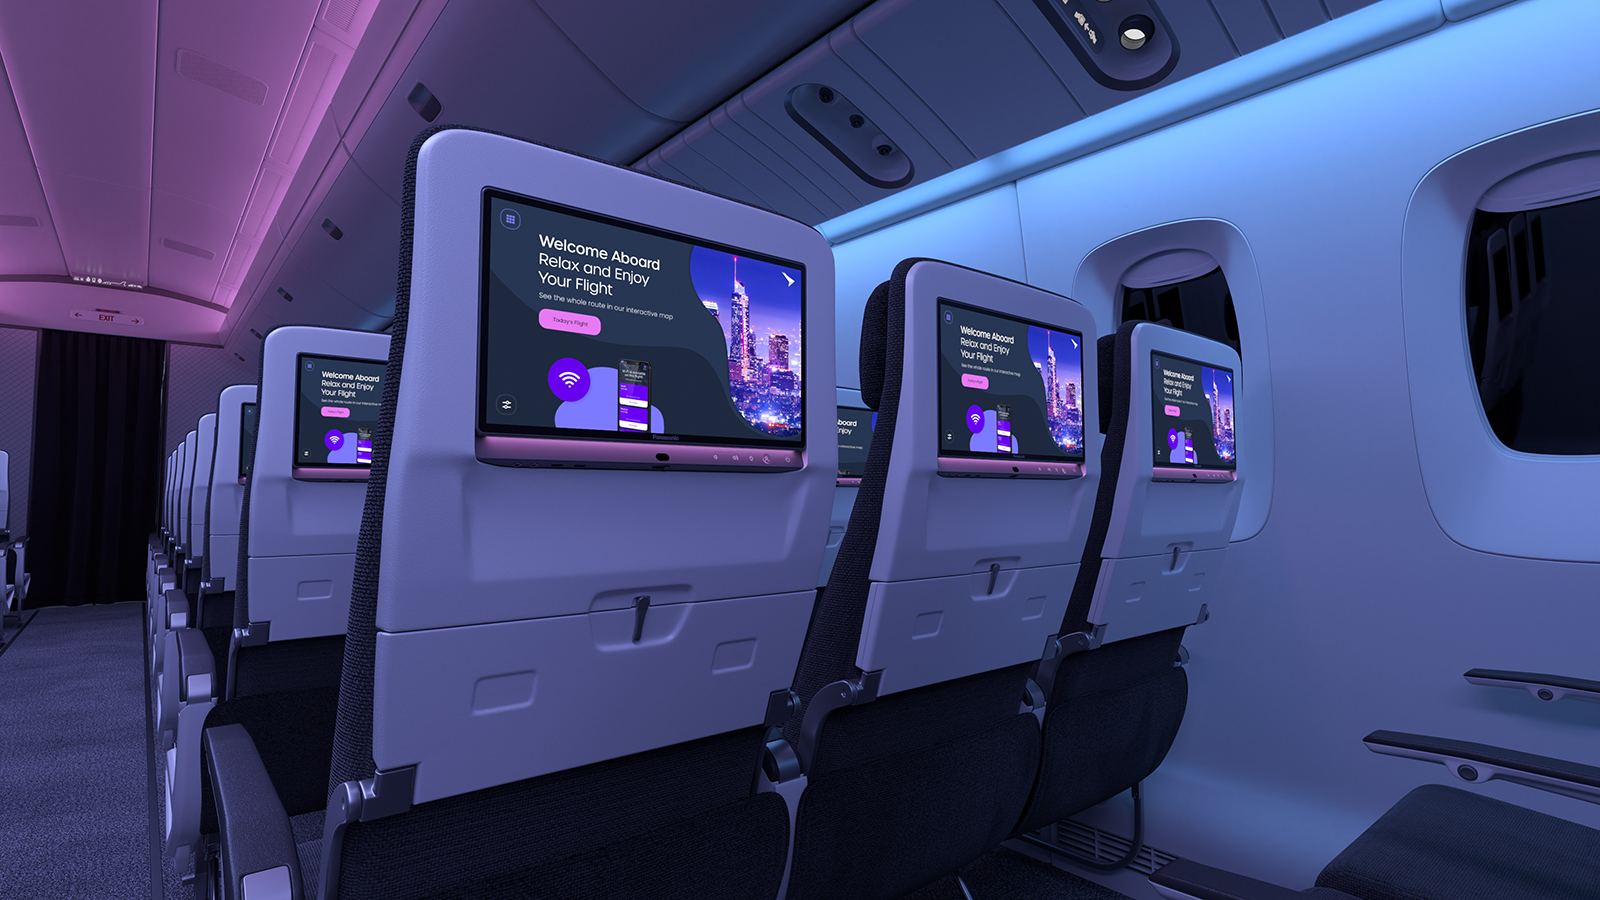 Photo: In-flight entertainment system Astrova